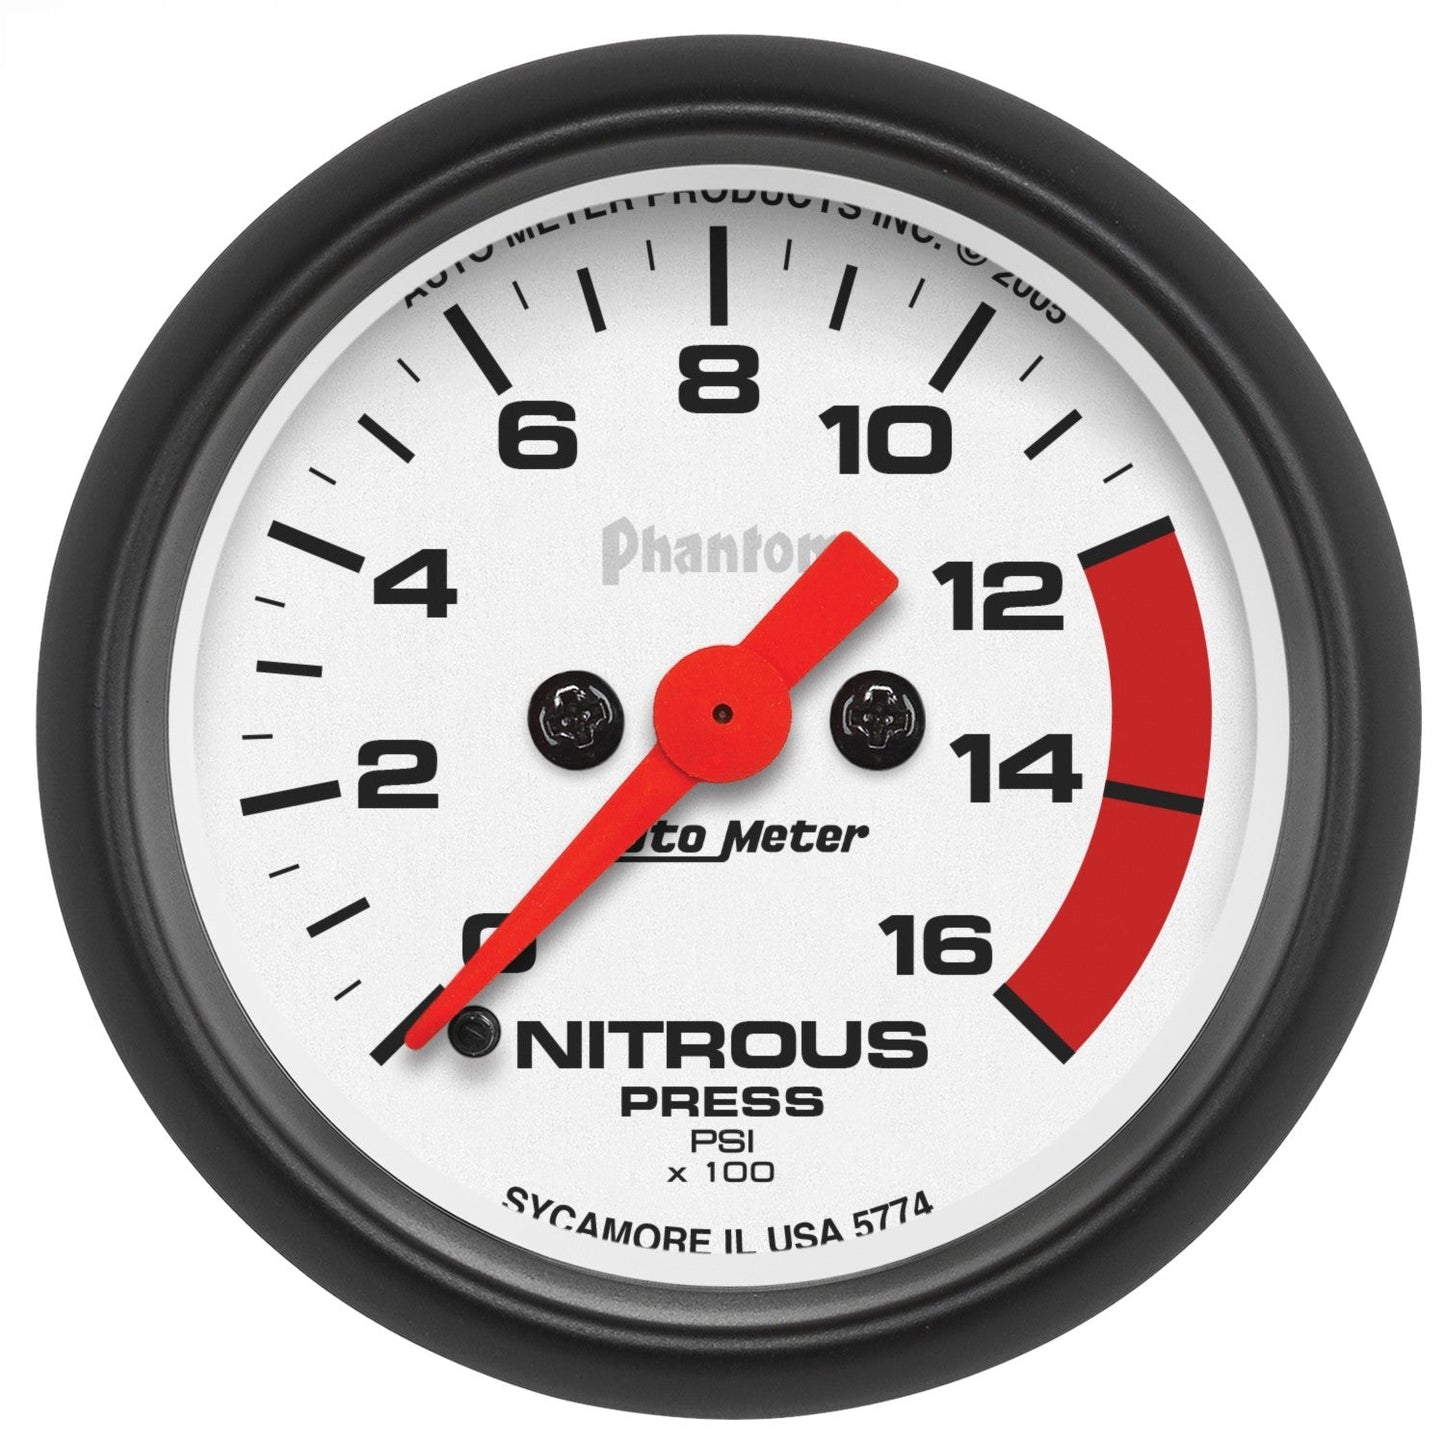 AutoMeter - PRESIÓN DE NITROSO DE 2-1/16", 0-1600 PSI, MOTOR PASO A PASO, FANTASMA (5774)